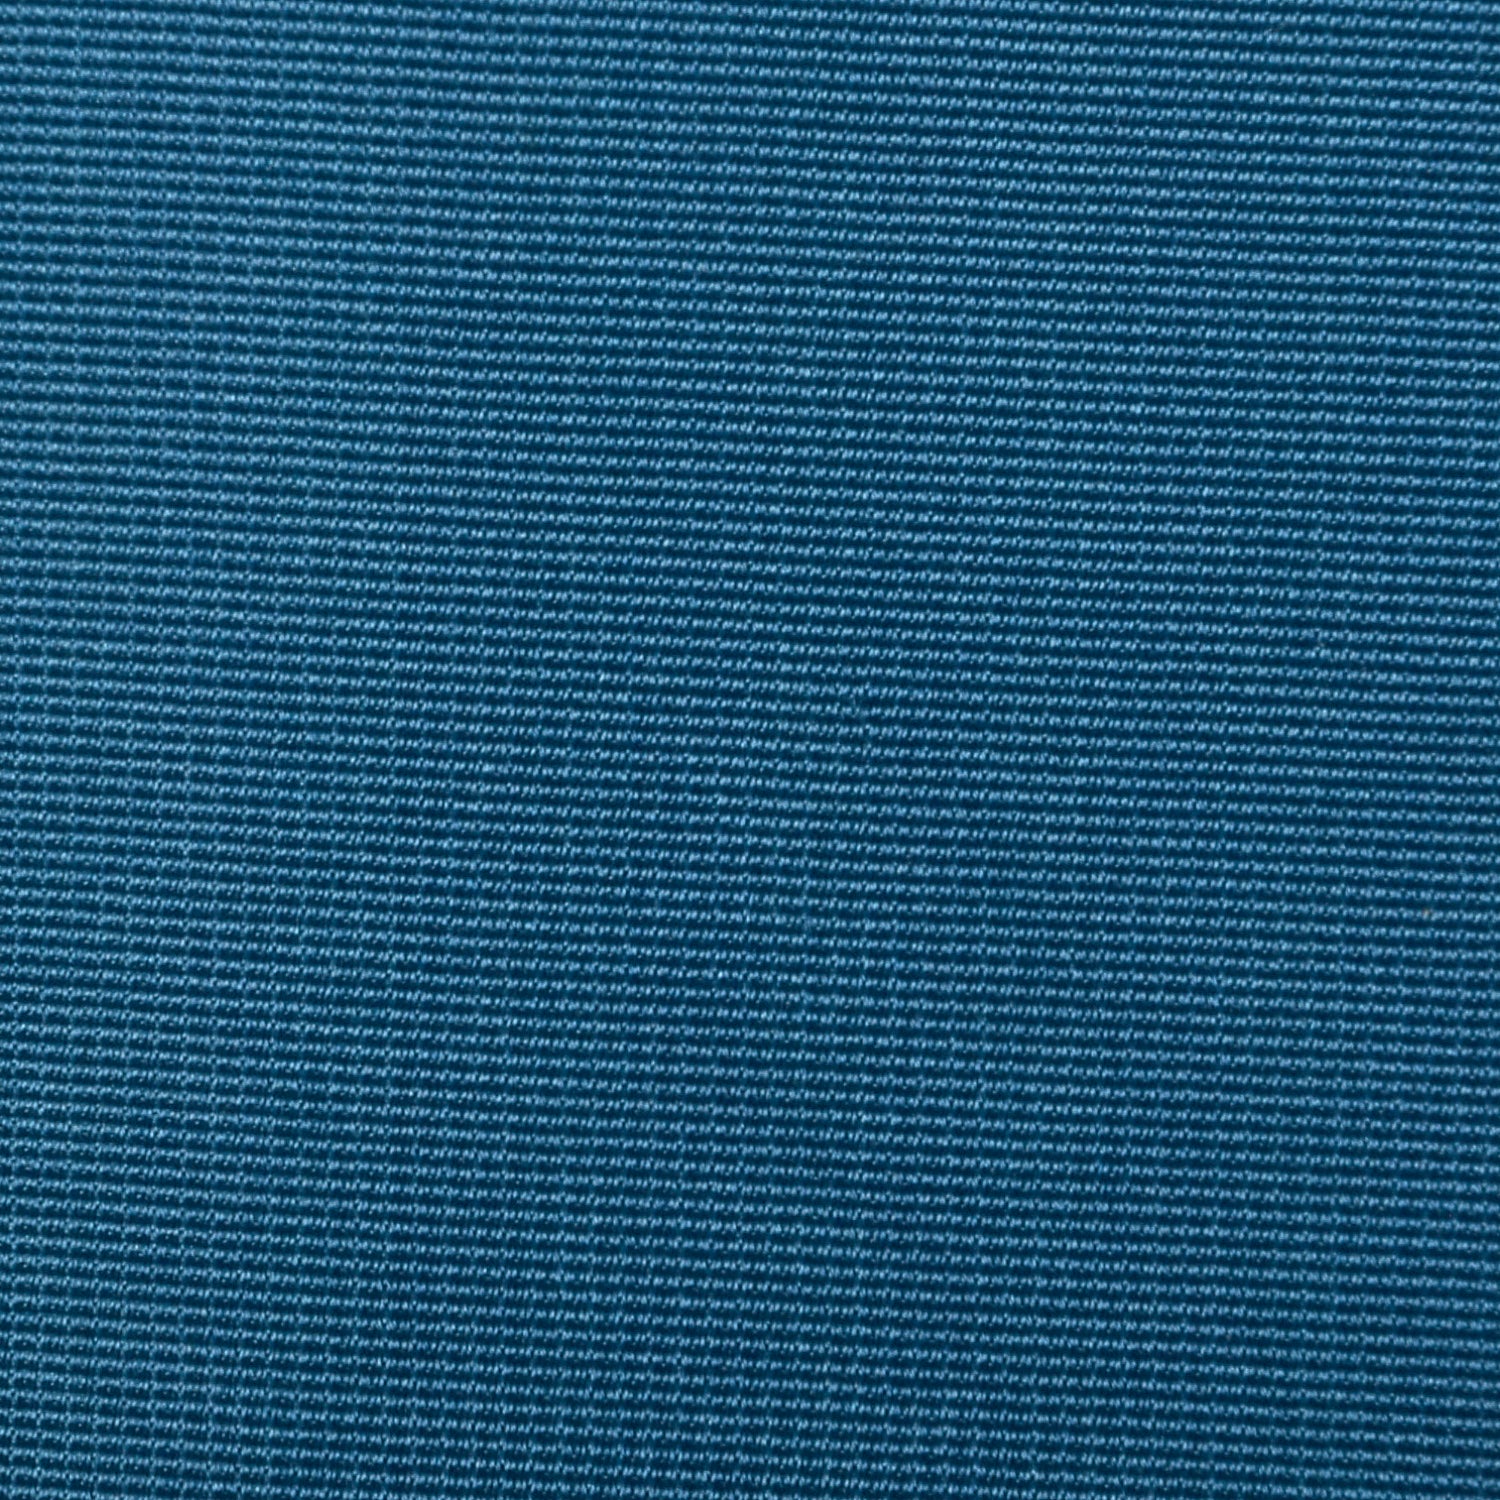 Blue Silk Opera Coat from Marshall Field & Co. 28 Shop